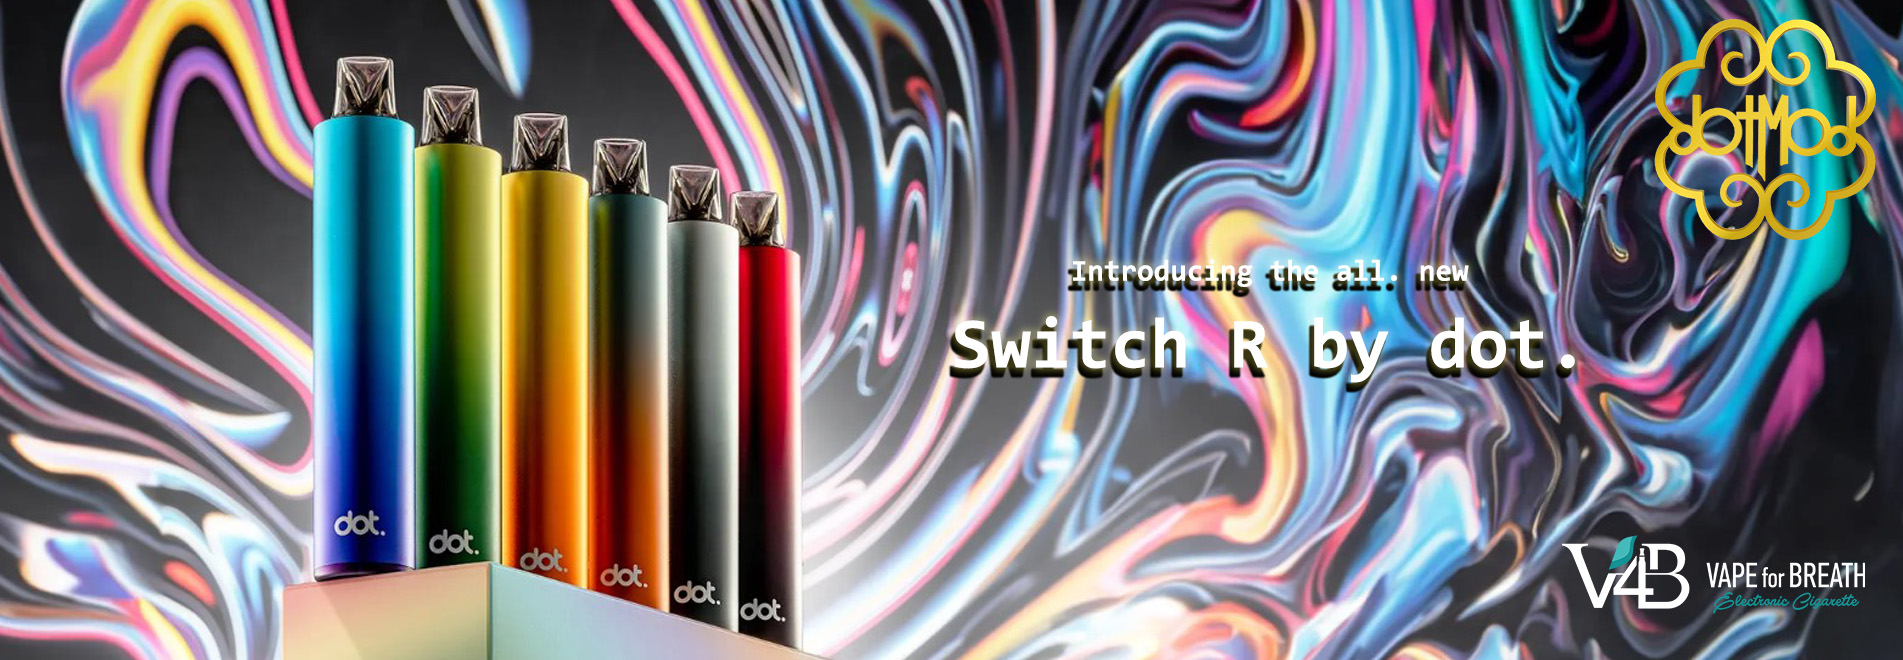 Dot Switch R